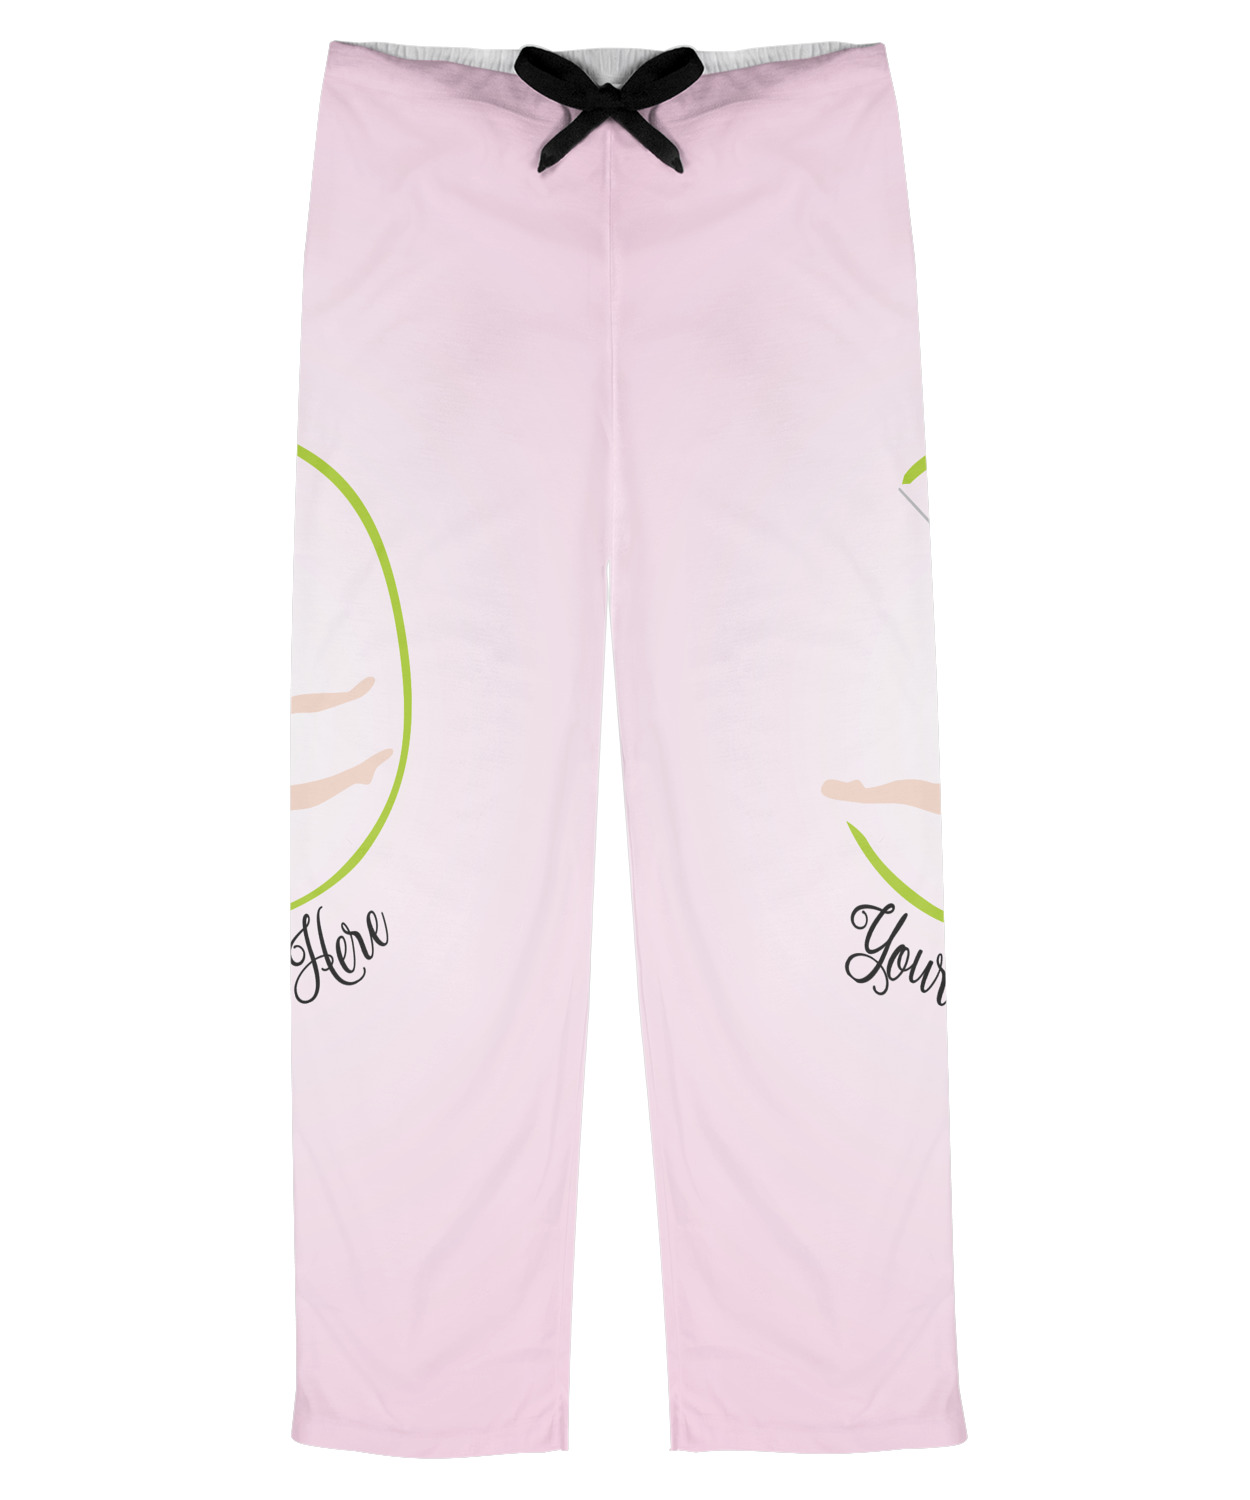 Custom Gymnastics with Name/Text Mens Pajama Pants (Personalized)